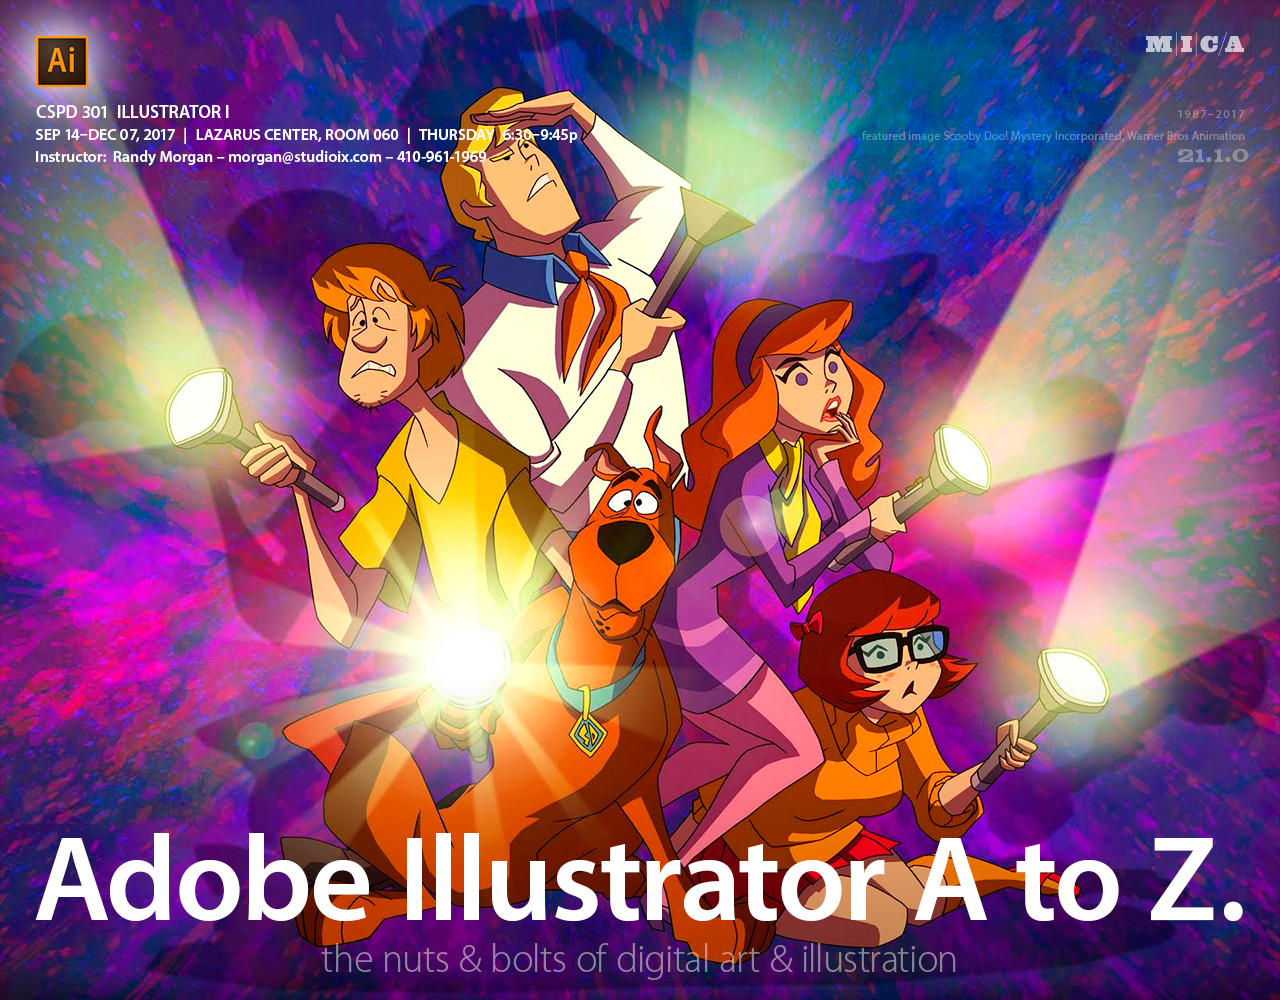 The Adobe Illustrator WOW Book For CS6 And CC Books Pdf File